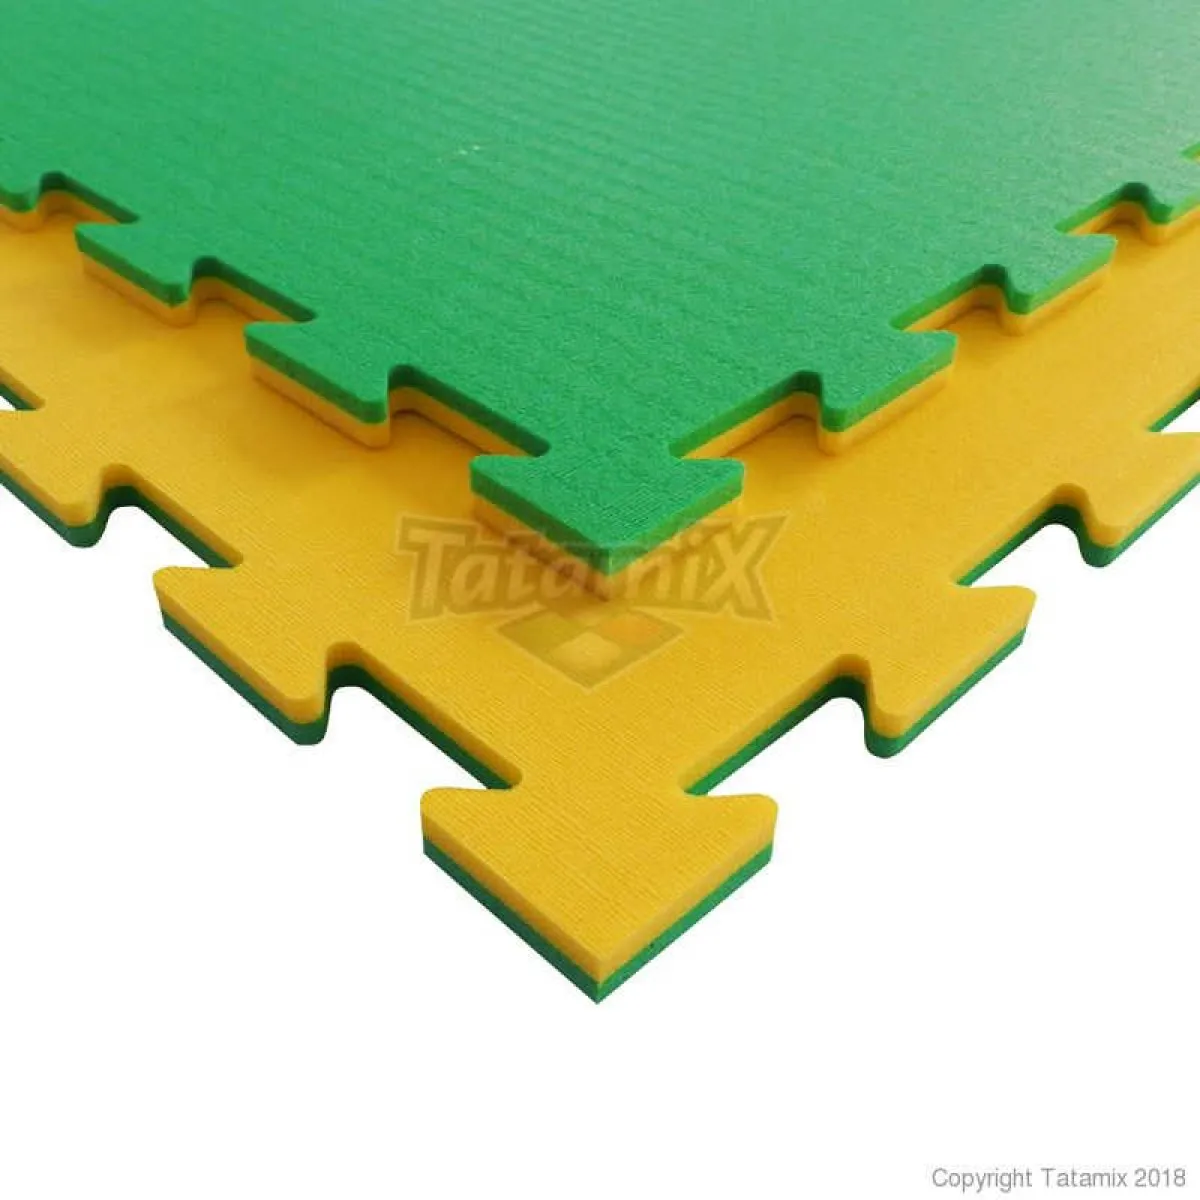 Kampfsportmatte Tatami Schule B14FR gelb/grün 100 cm x 100 cm x 1,4 cm